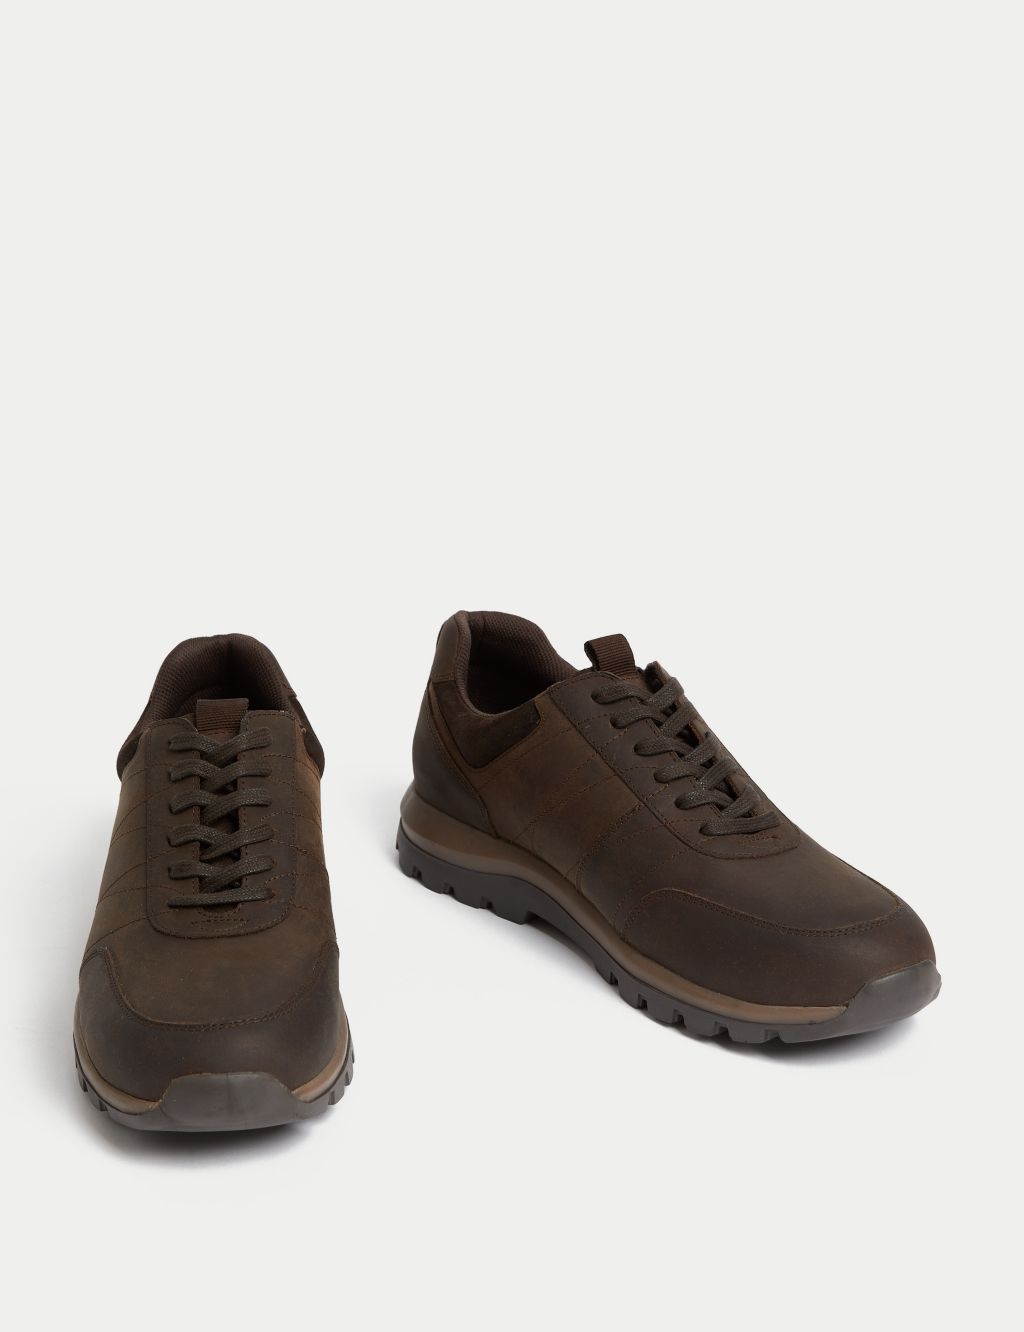 Showerproof Leather Walking Shoes image 2